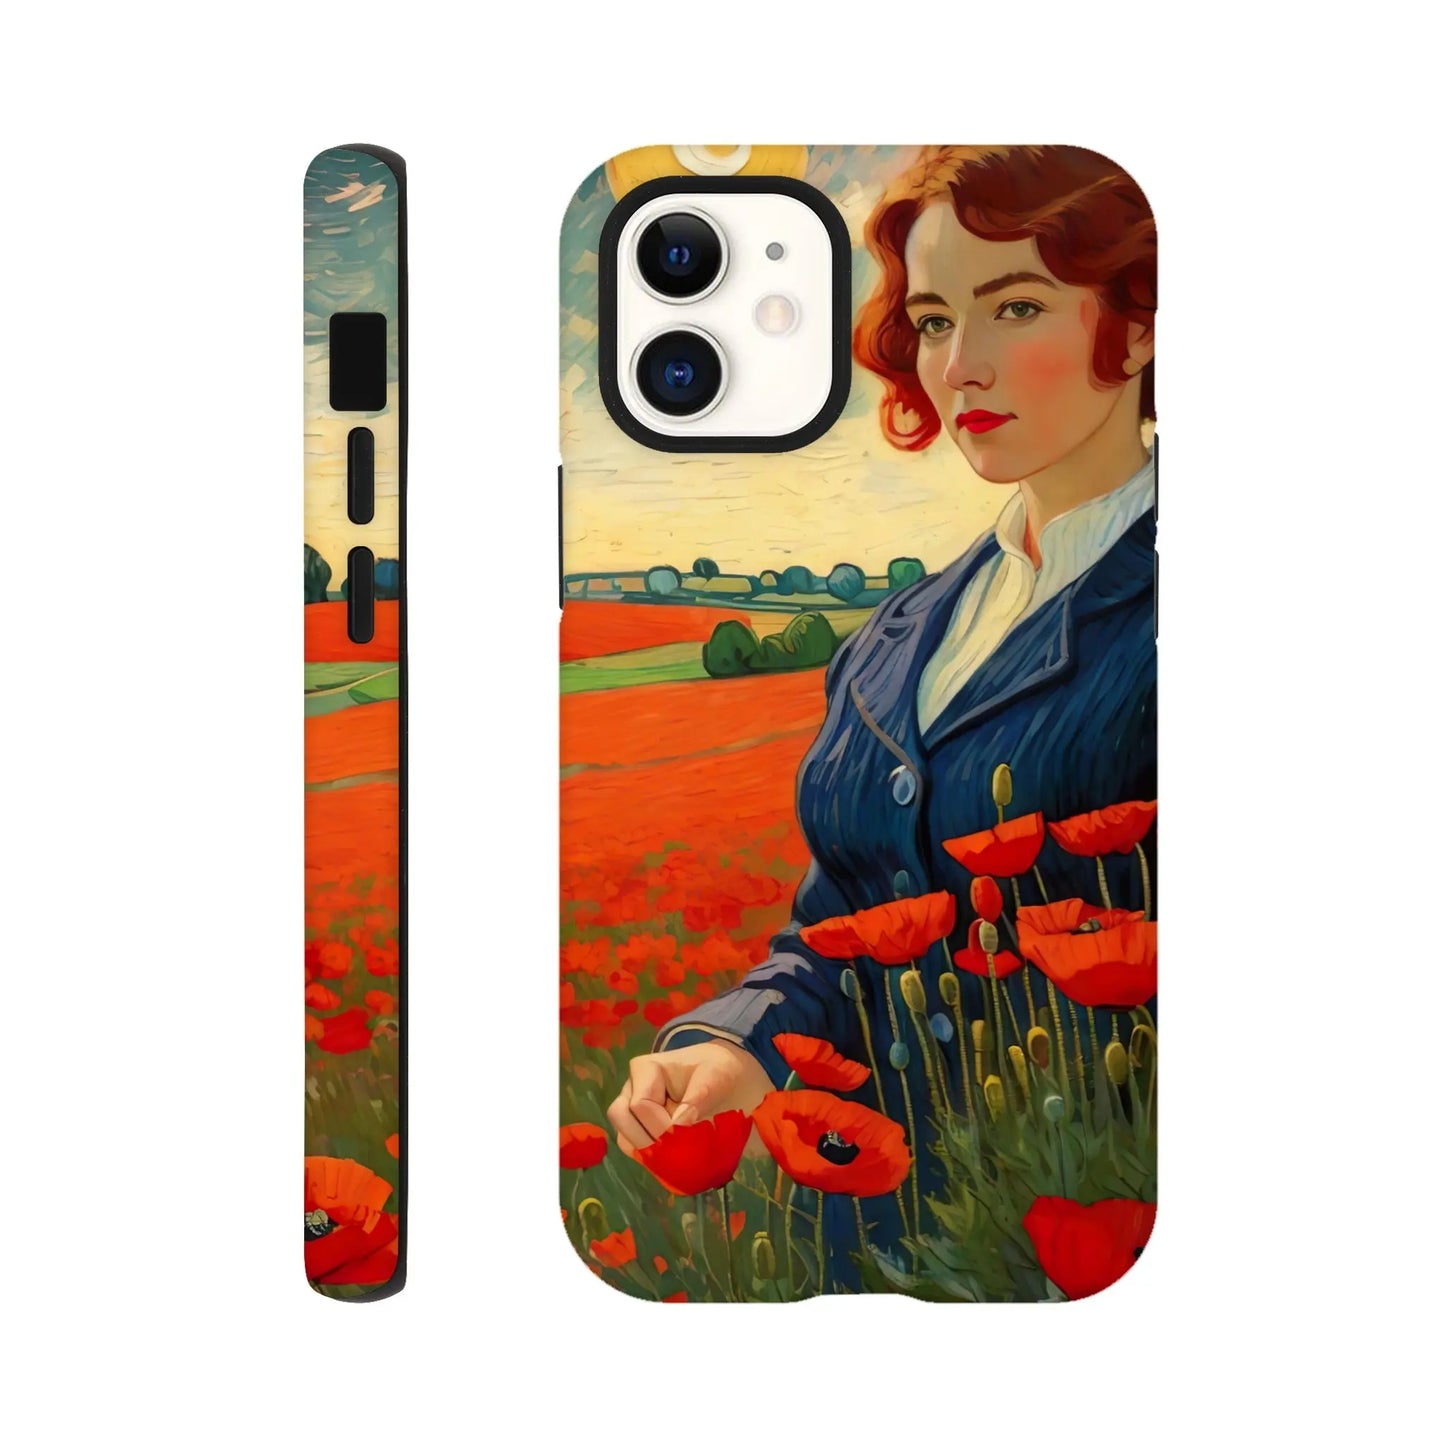 Smartphone-Hülle "Hart" - Blütezeit - Malerischer Stil, KI-Kunst RolConArt, Landschaften, iPhone-12-Mini